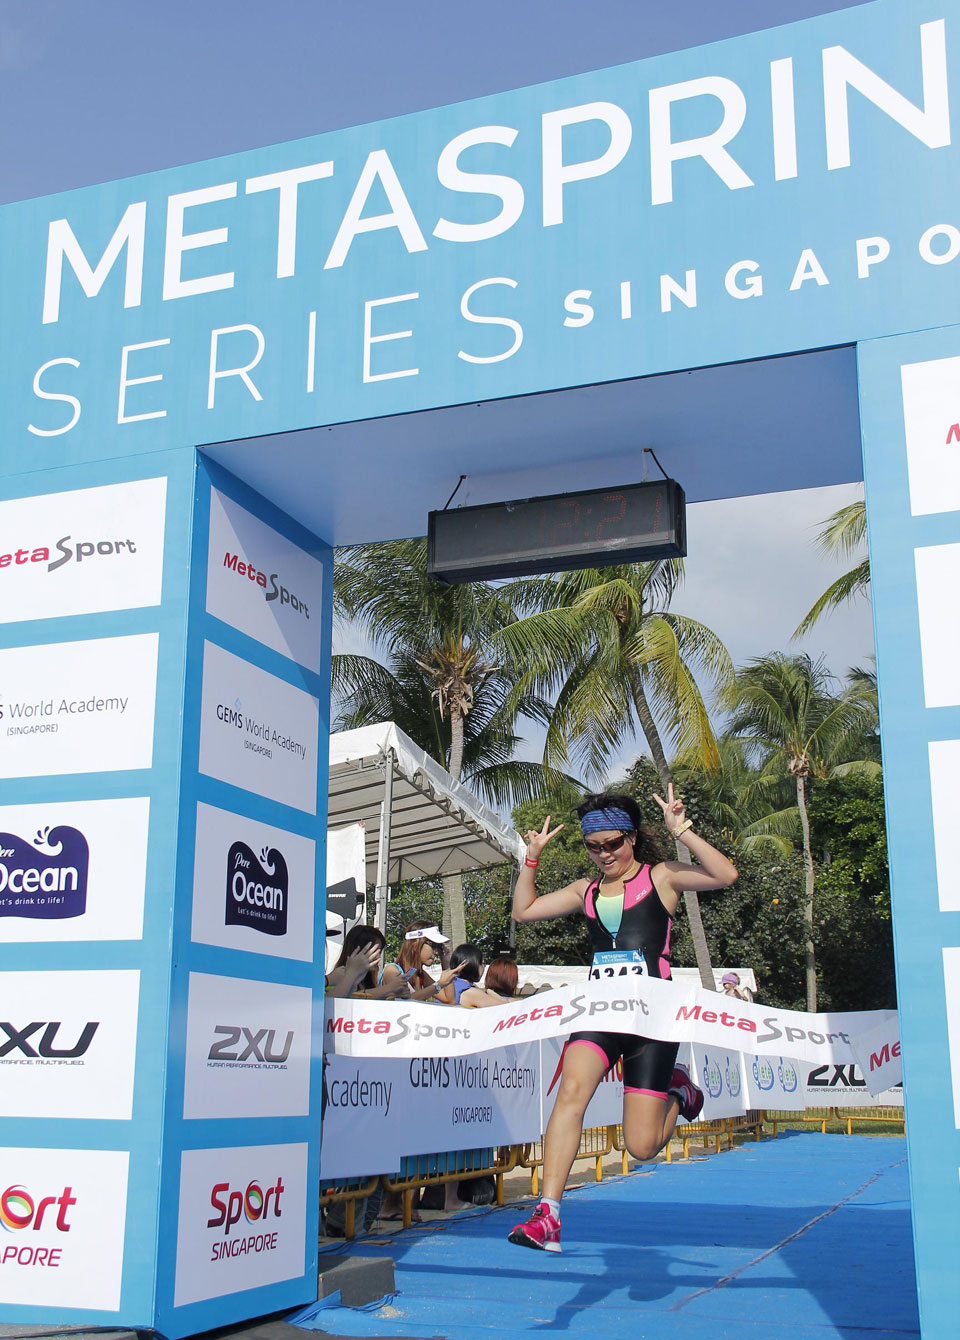 MetaSprint Series 2016 kicks off Singapore Triathlon Season